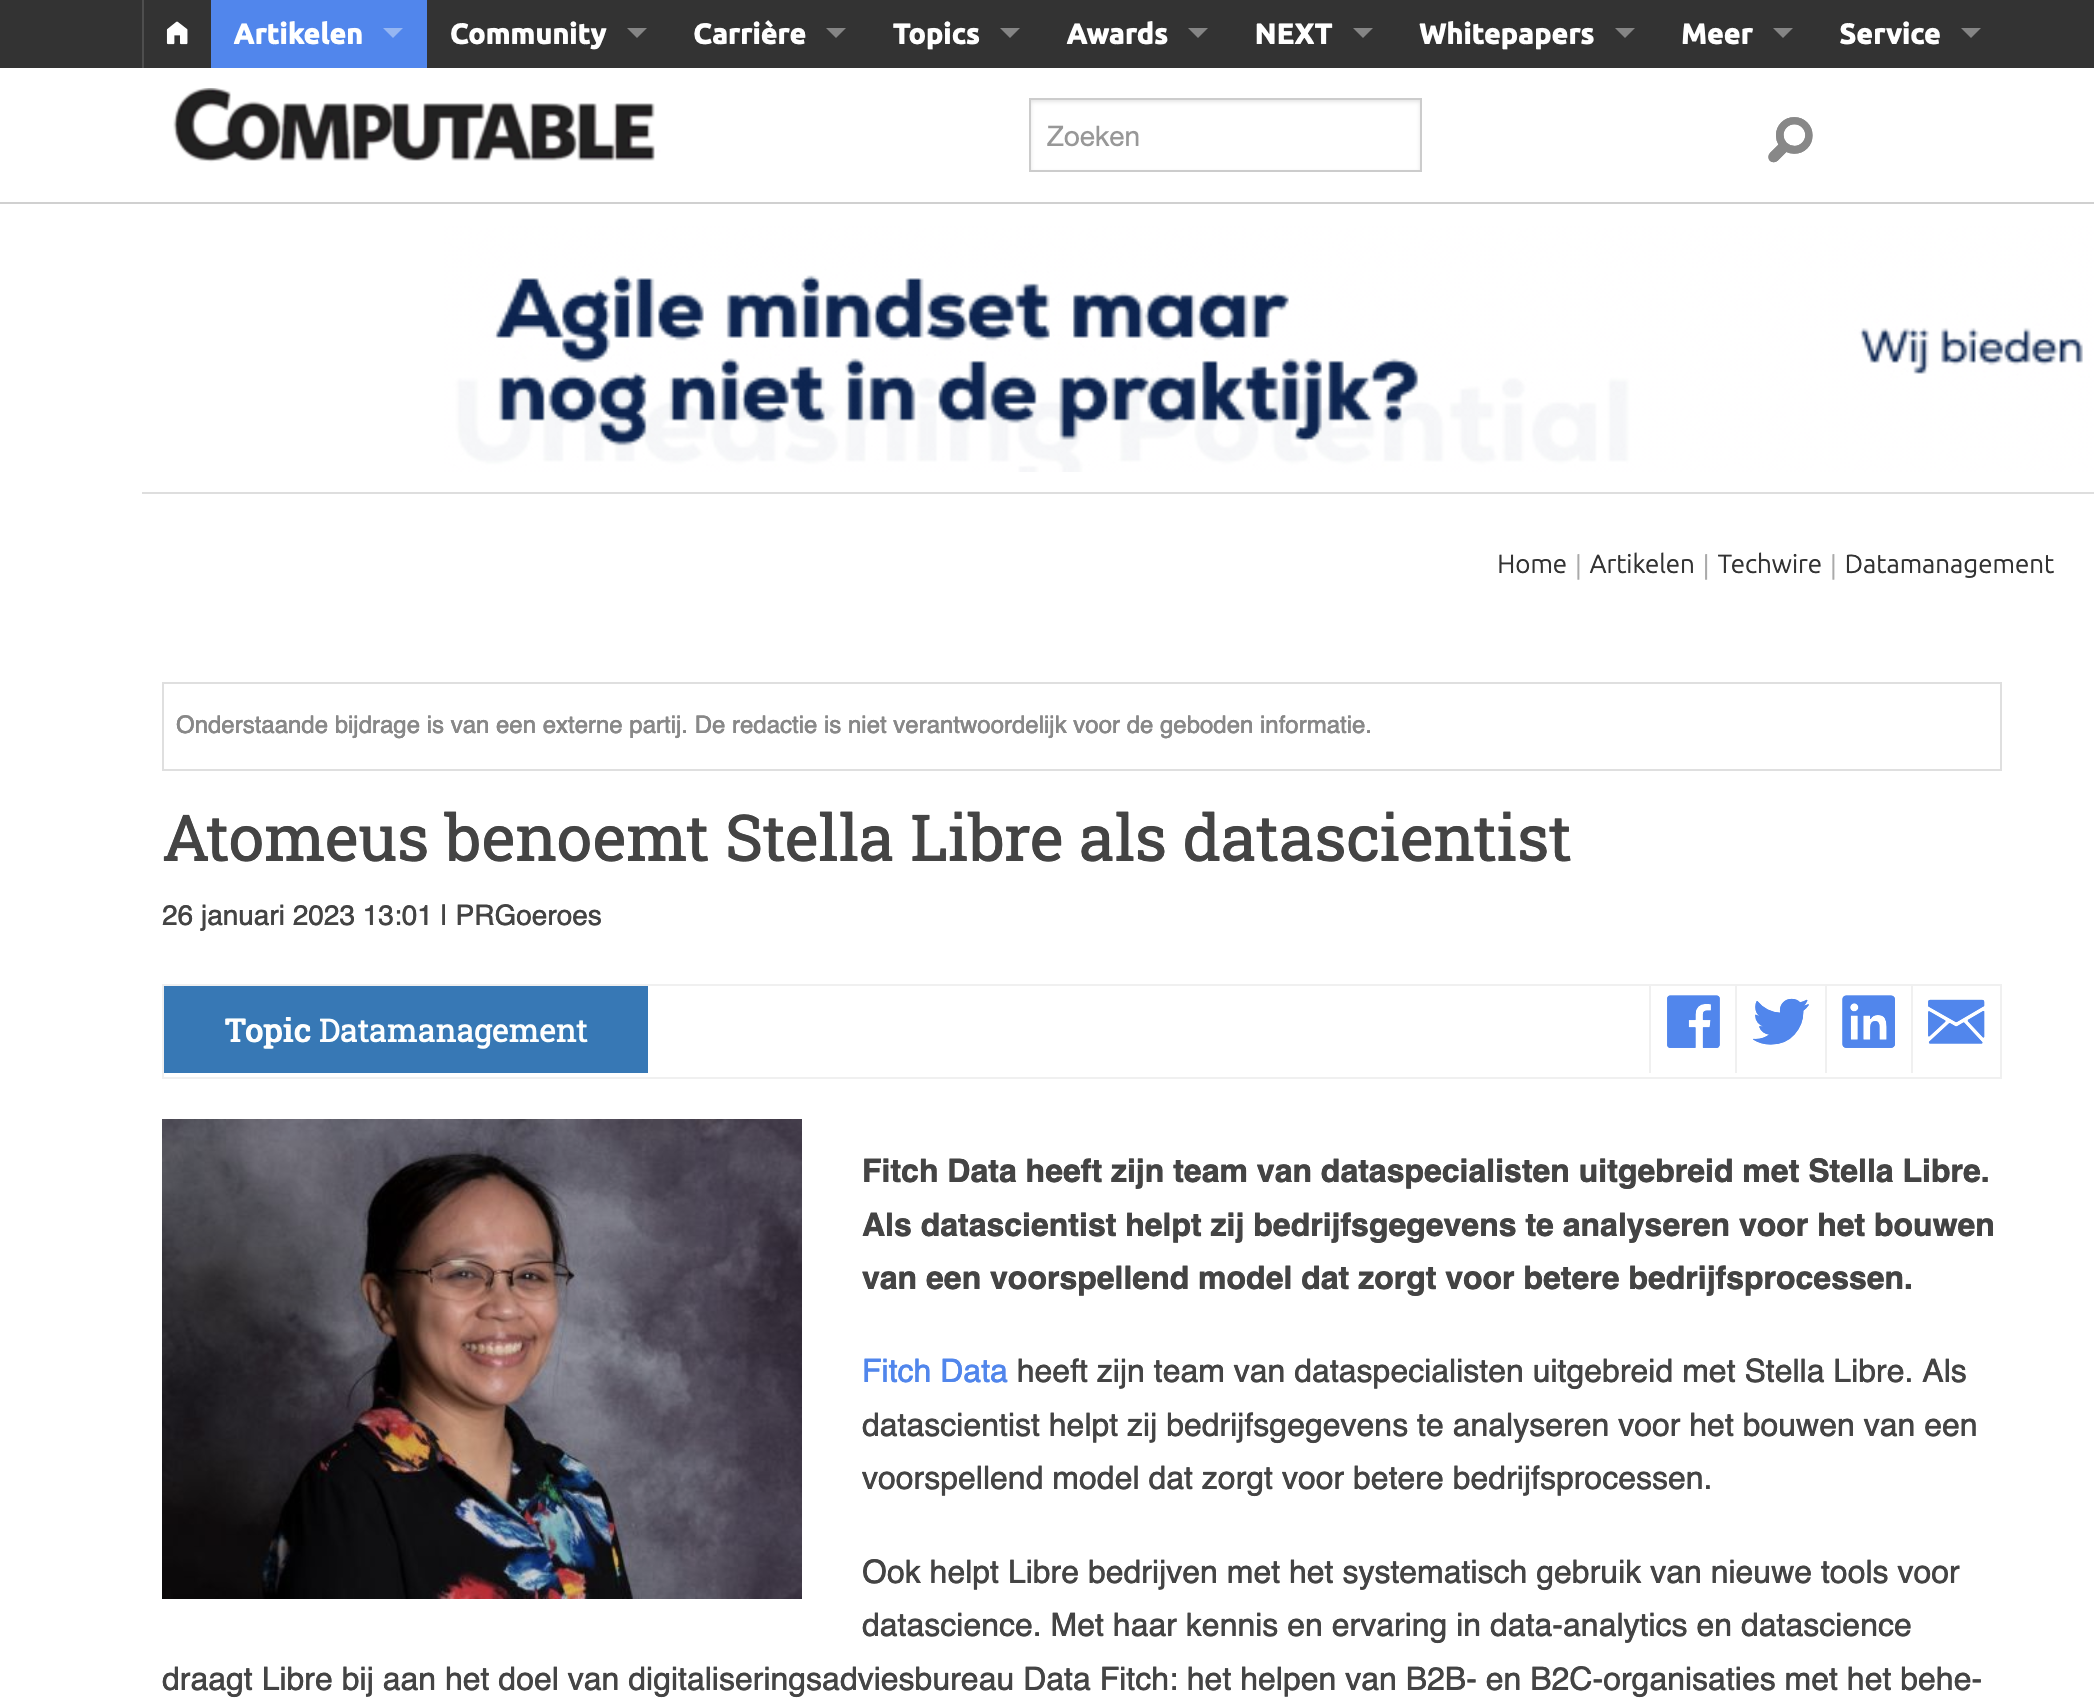 Atomeus benoemt Stella Libre als datascientist